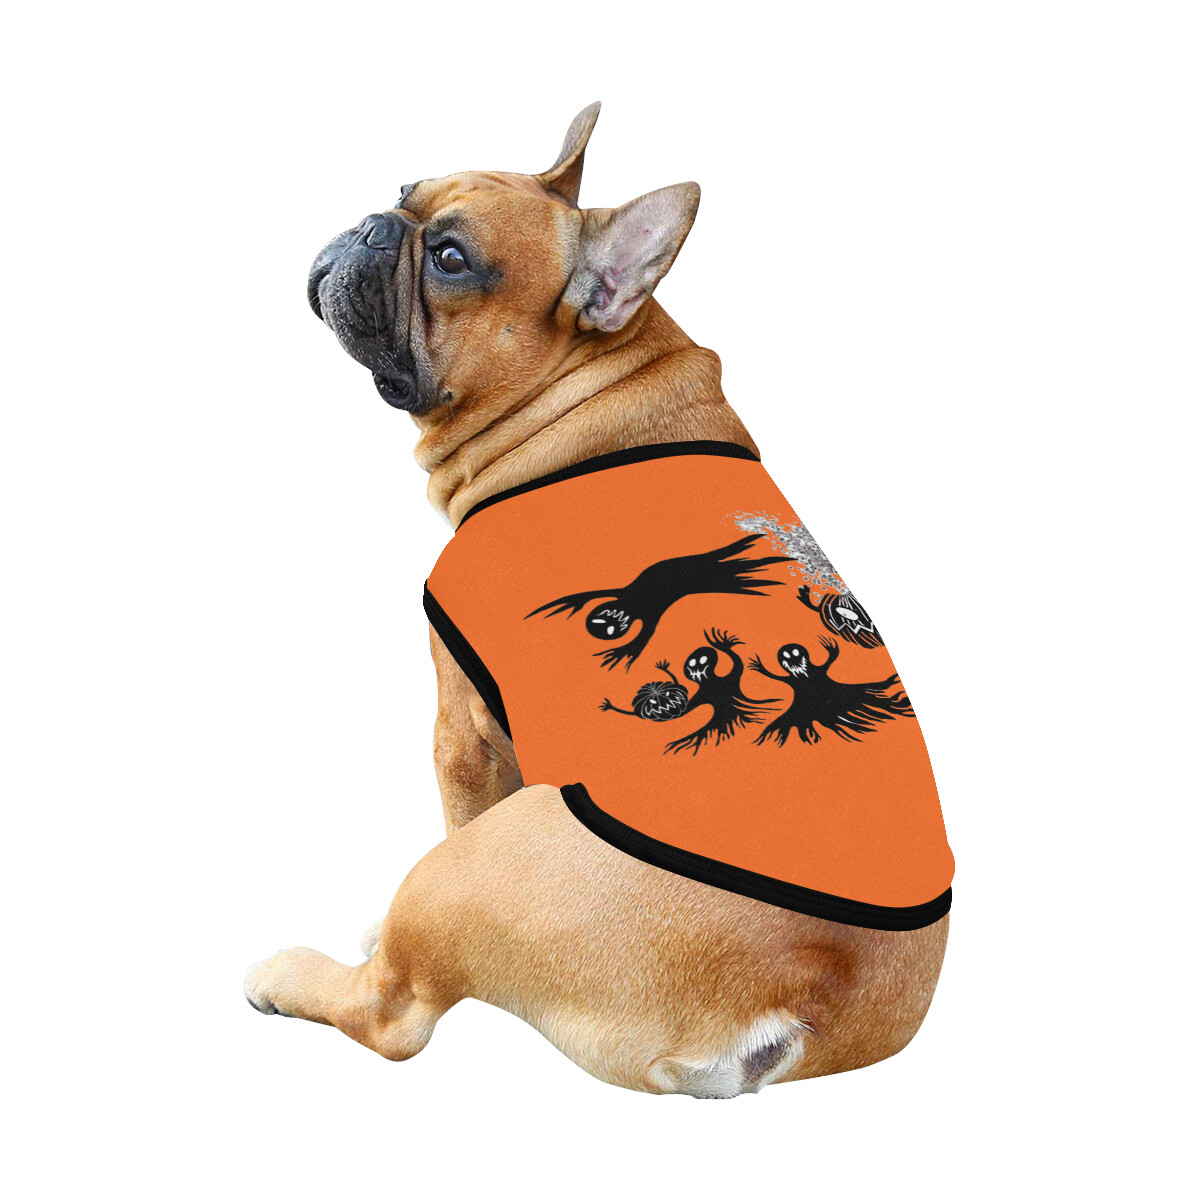 🐕 Halloween Dog Tank Top, Dog shirt, Dog clothes, Gifts, front back print, 7 sizes XS to 3XL, ghosts, pumpkins, halloween dog t-shirt orange